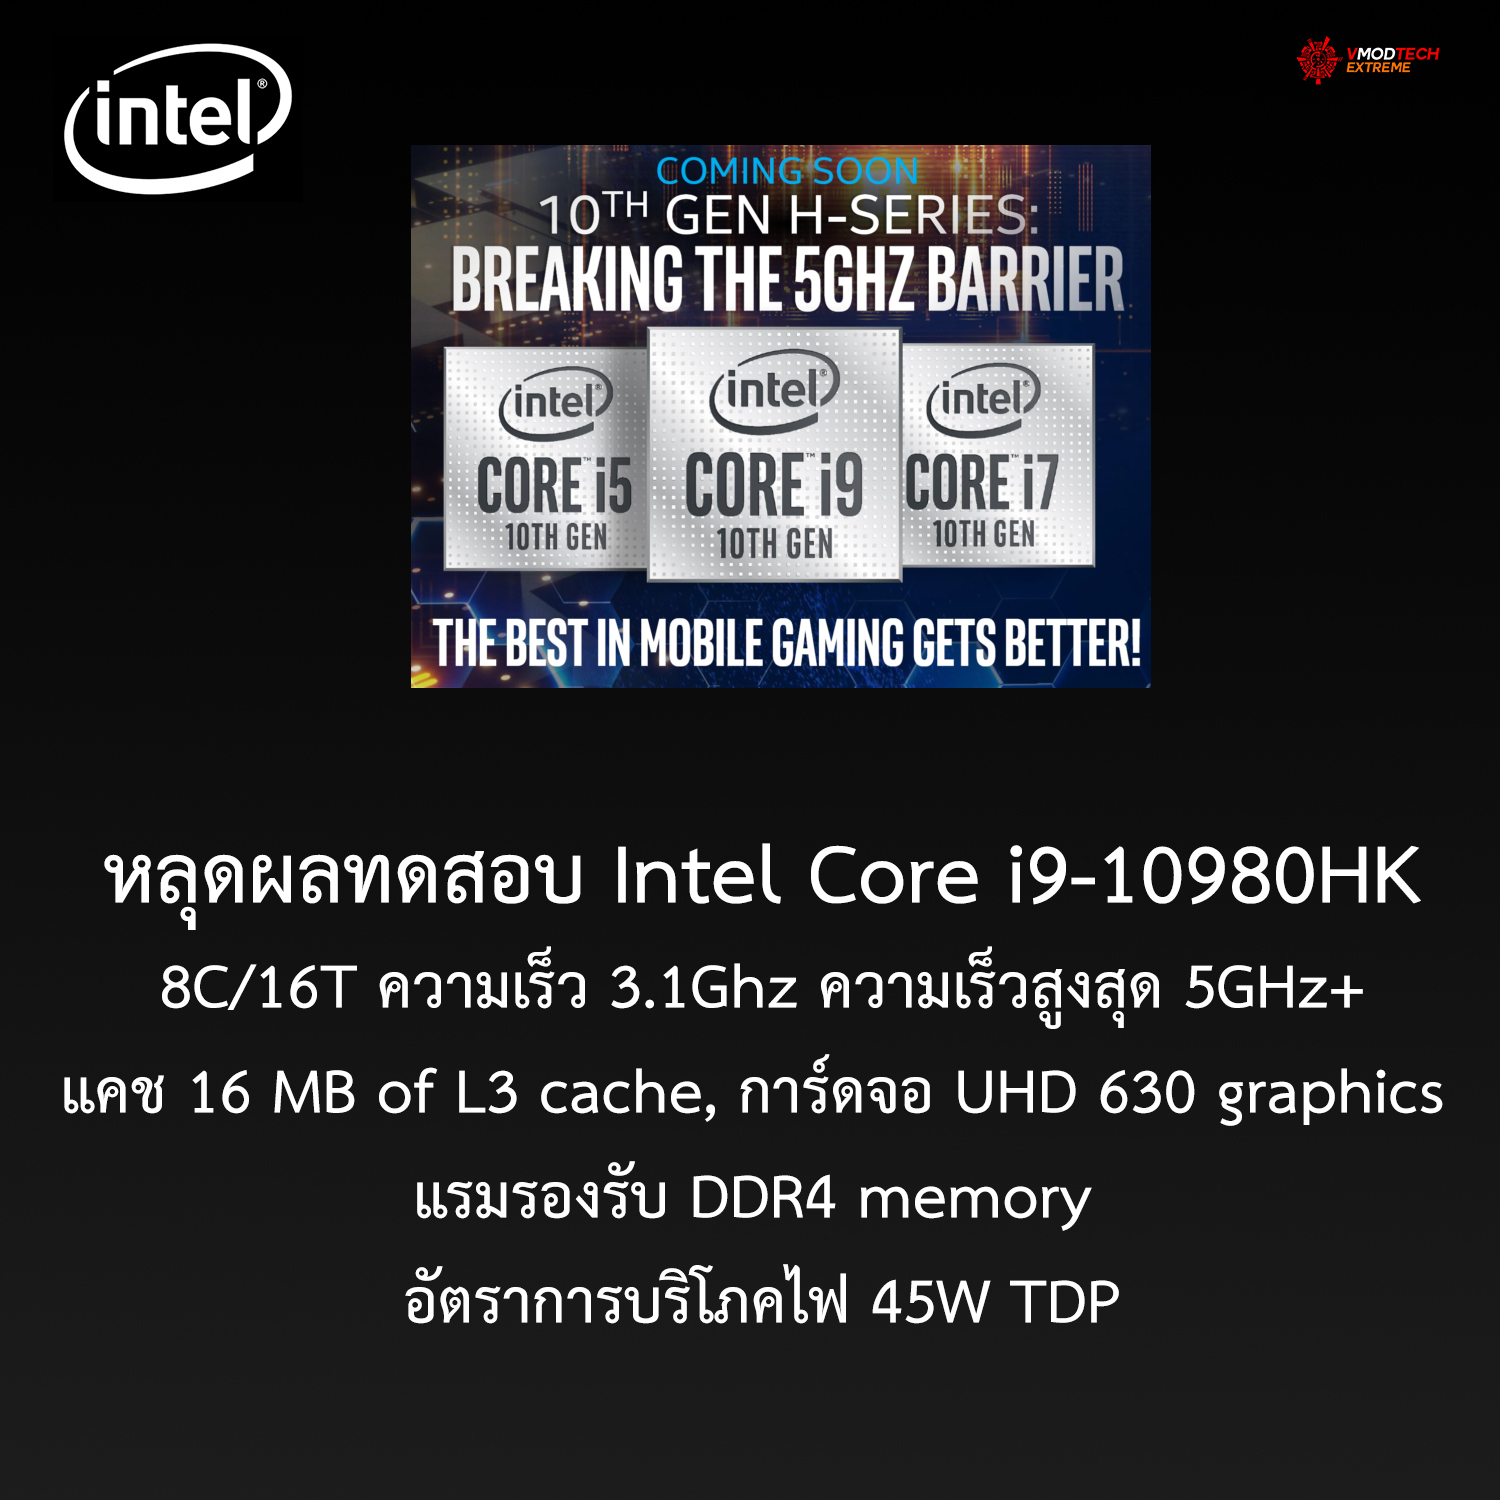 intel core i9 10980hk1 หลุดผลทดสอบ Intel Core i9 10980HK 8C/16T ความเร็ว 5GHz+ กันเลยทีเดียว 